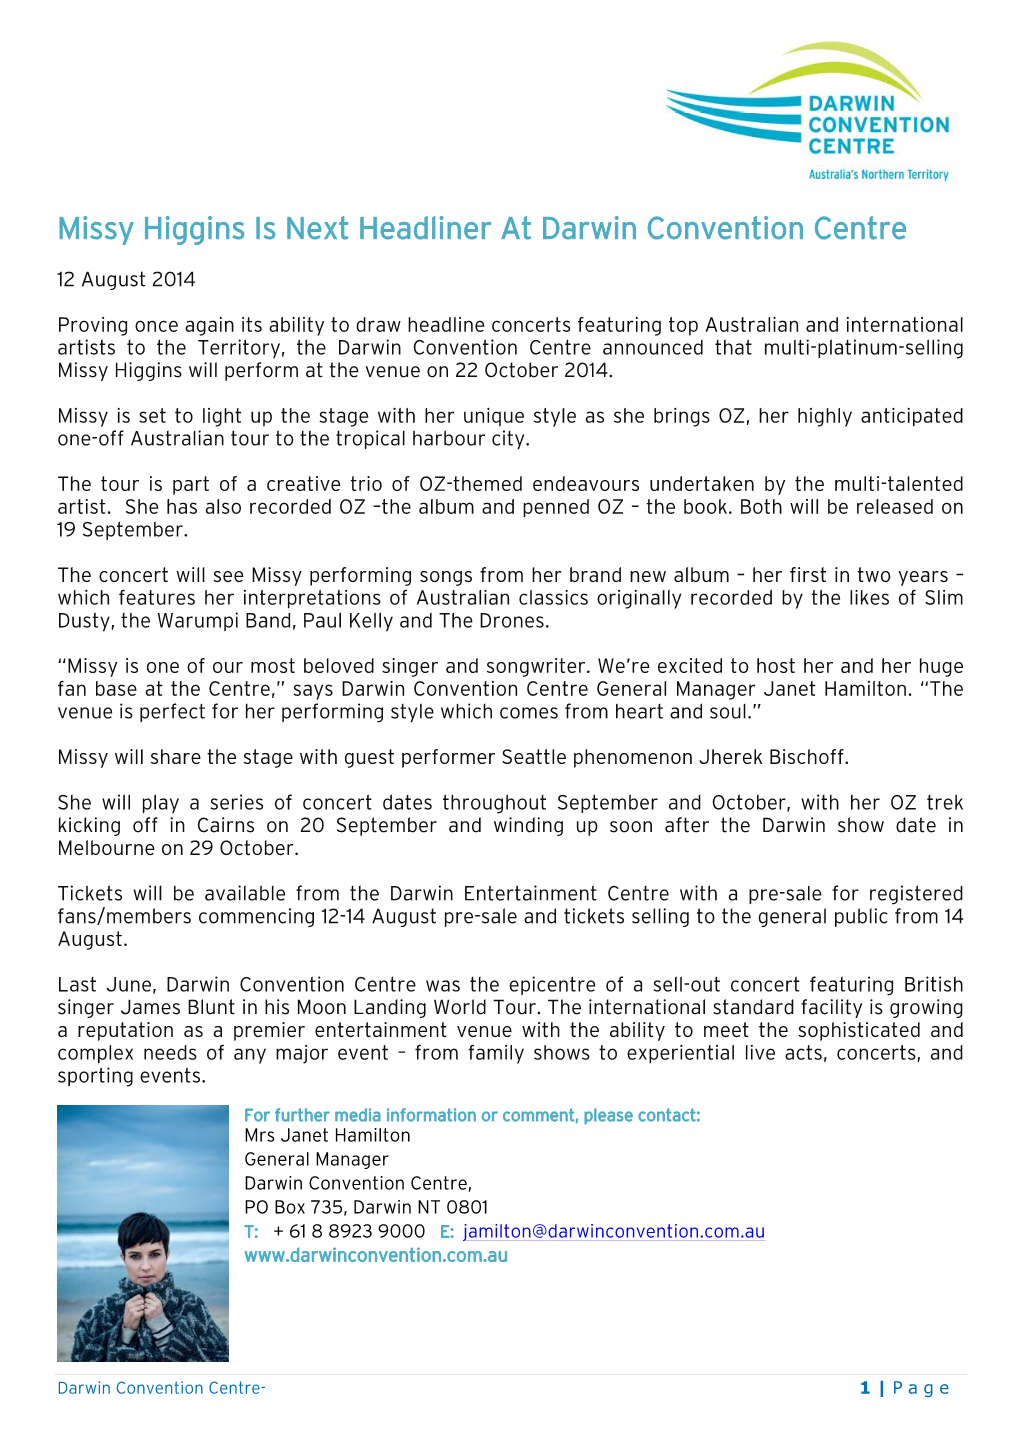 August 12 Missy Higgins Is Next Headliner at Darwin Convention